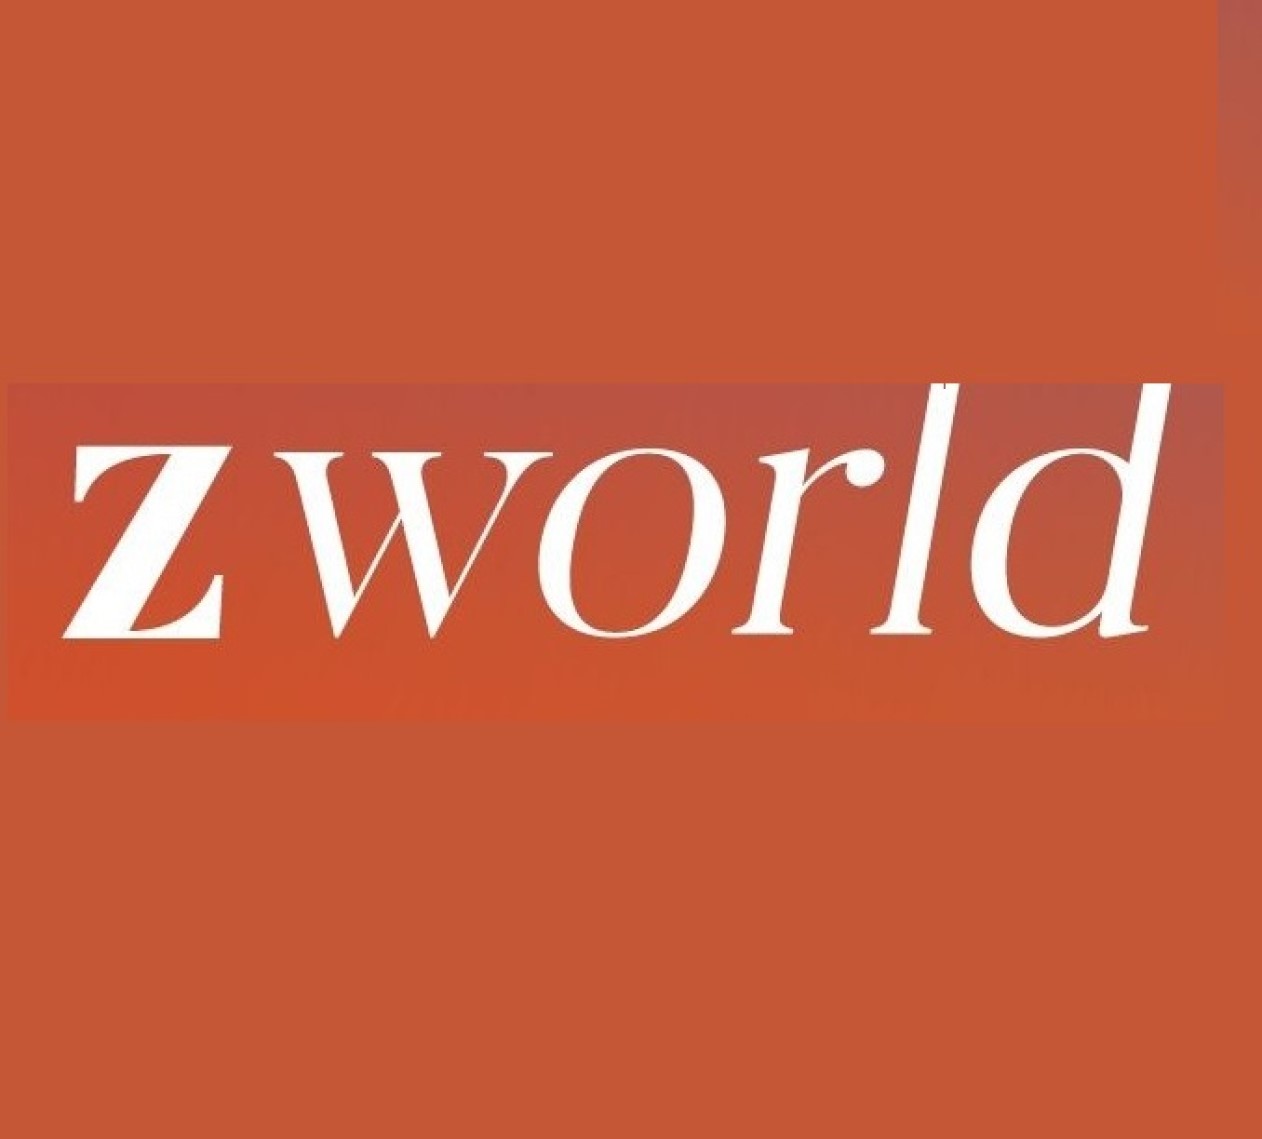 Zworld Holding